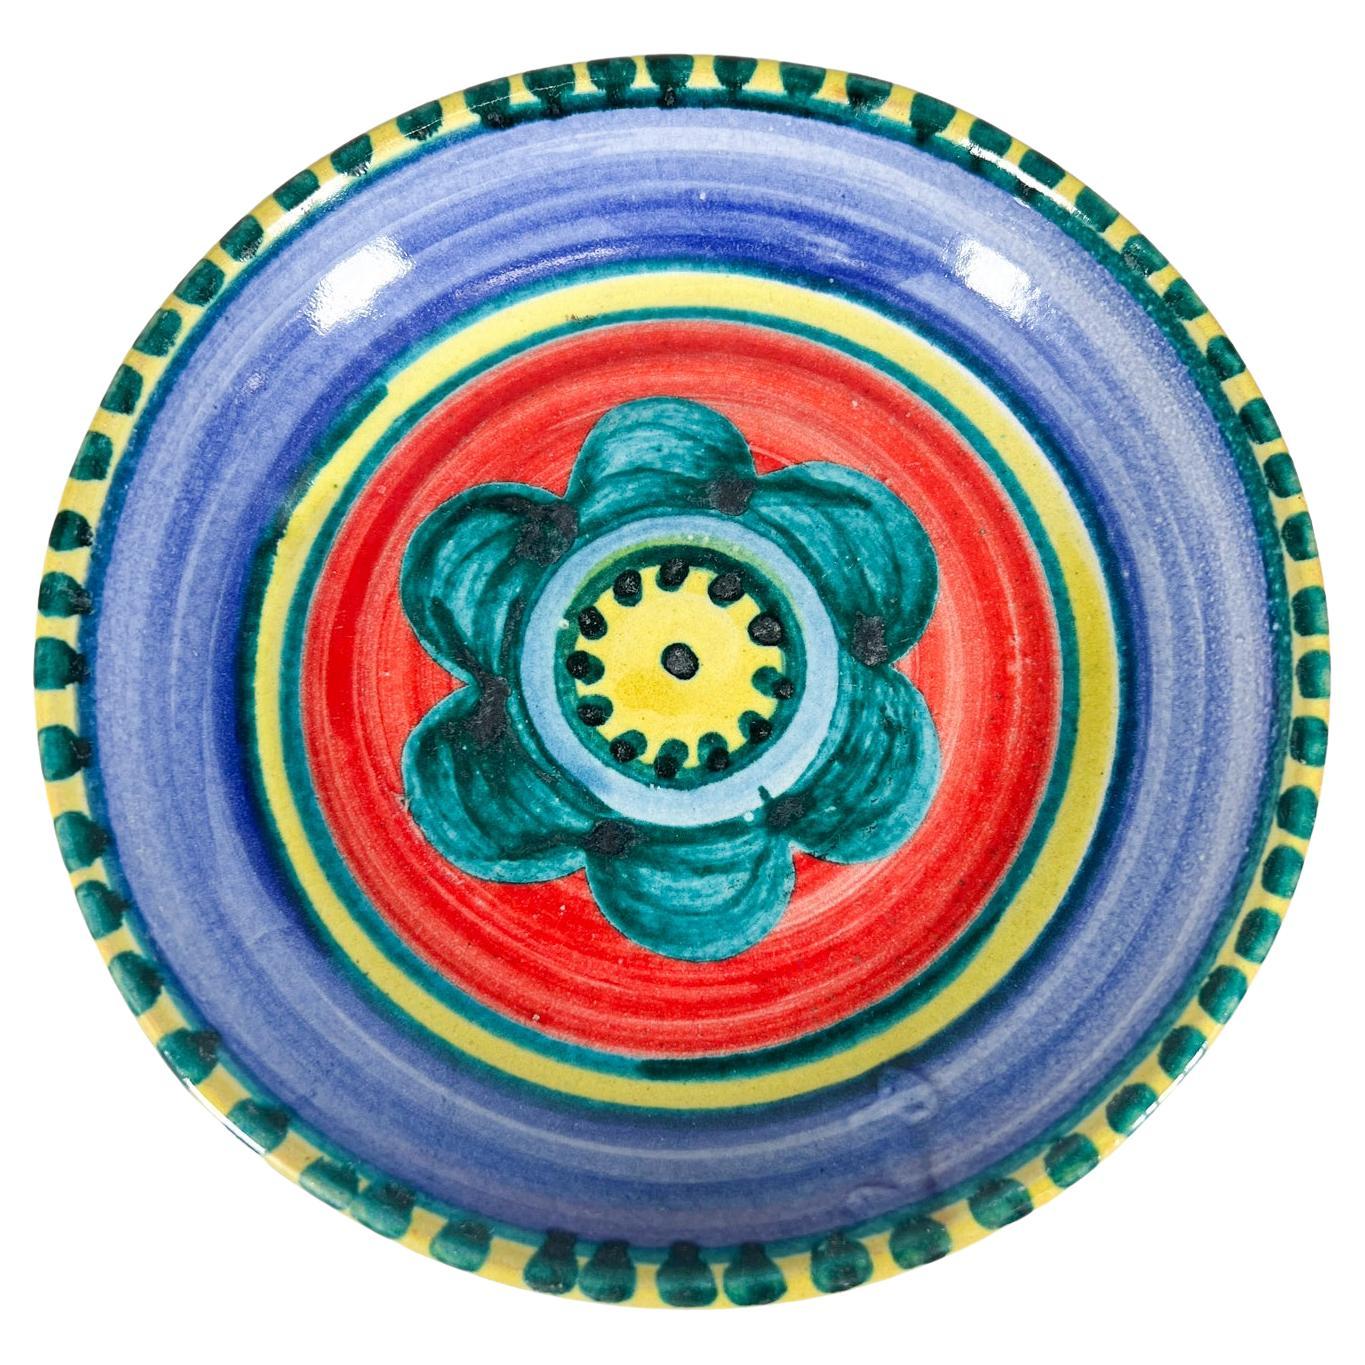 DeSimone Pottery Italien, farbenfrohe Keramik-Kunstteller mit Aqua-Blumenschale